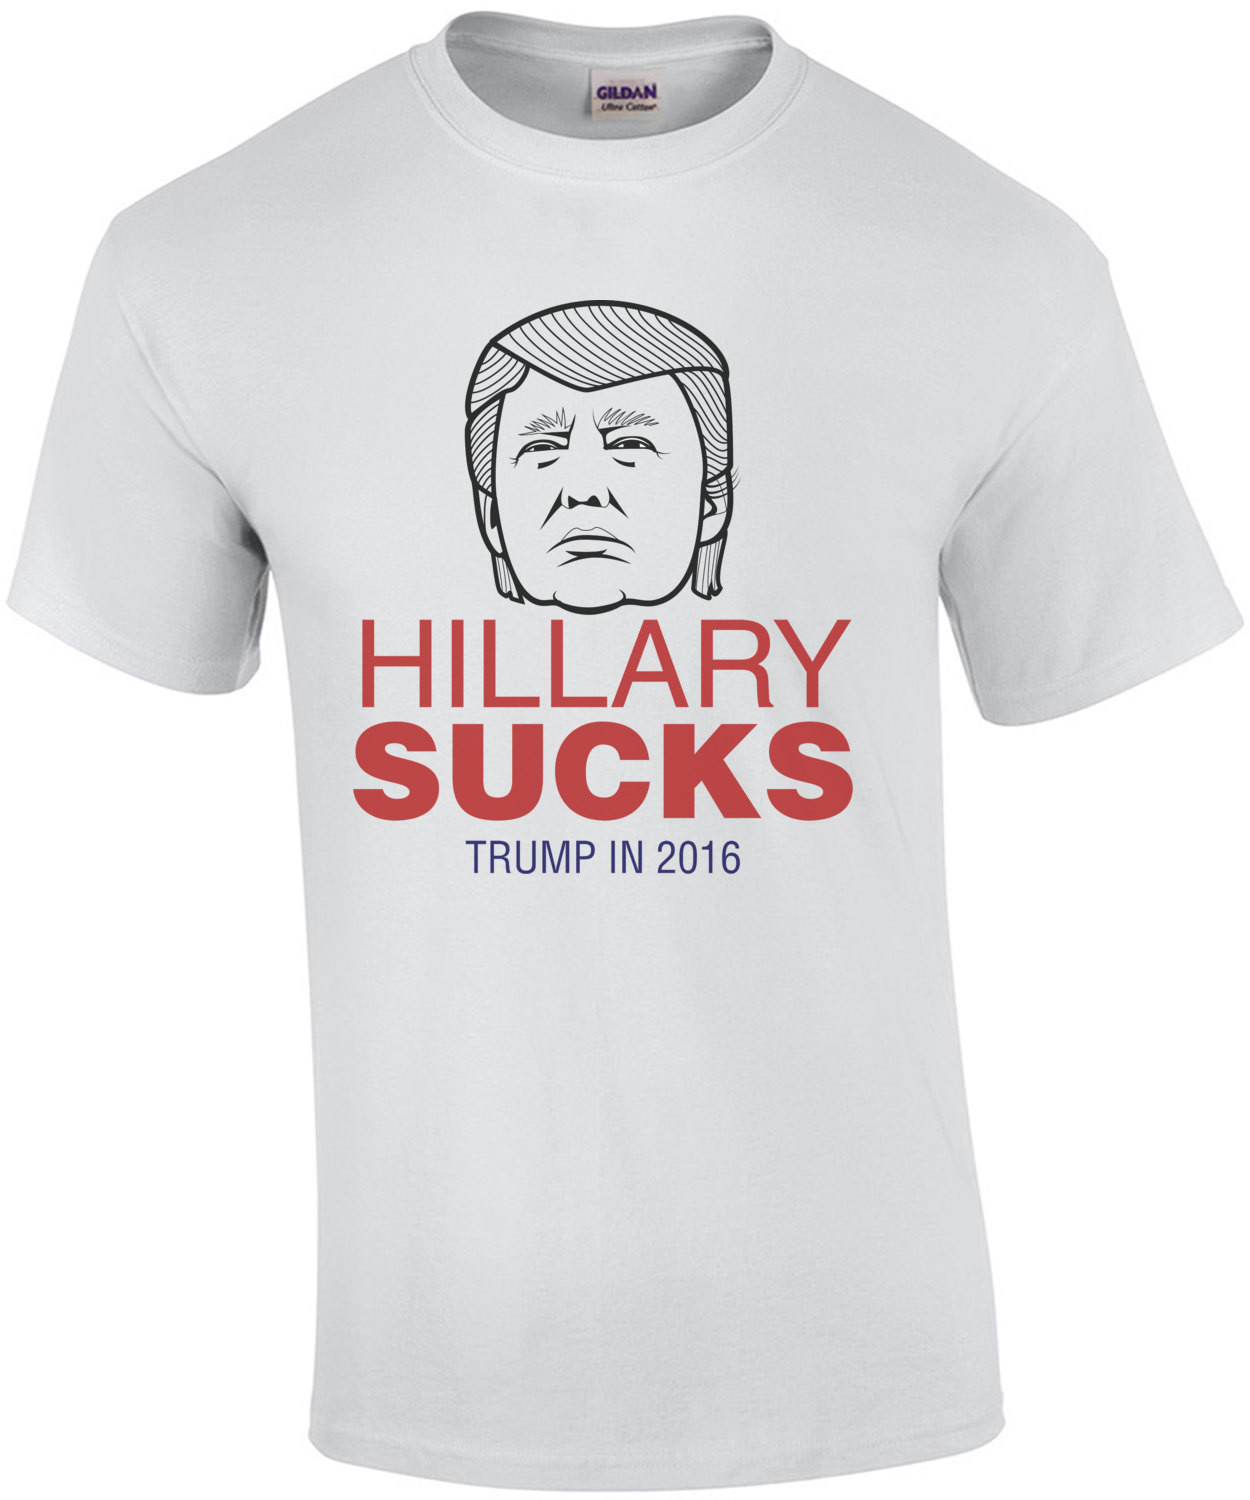 Hillary Sucks, Trump in 2016 - Anti Hillary T-Shirt